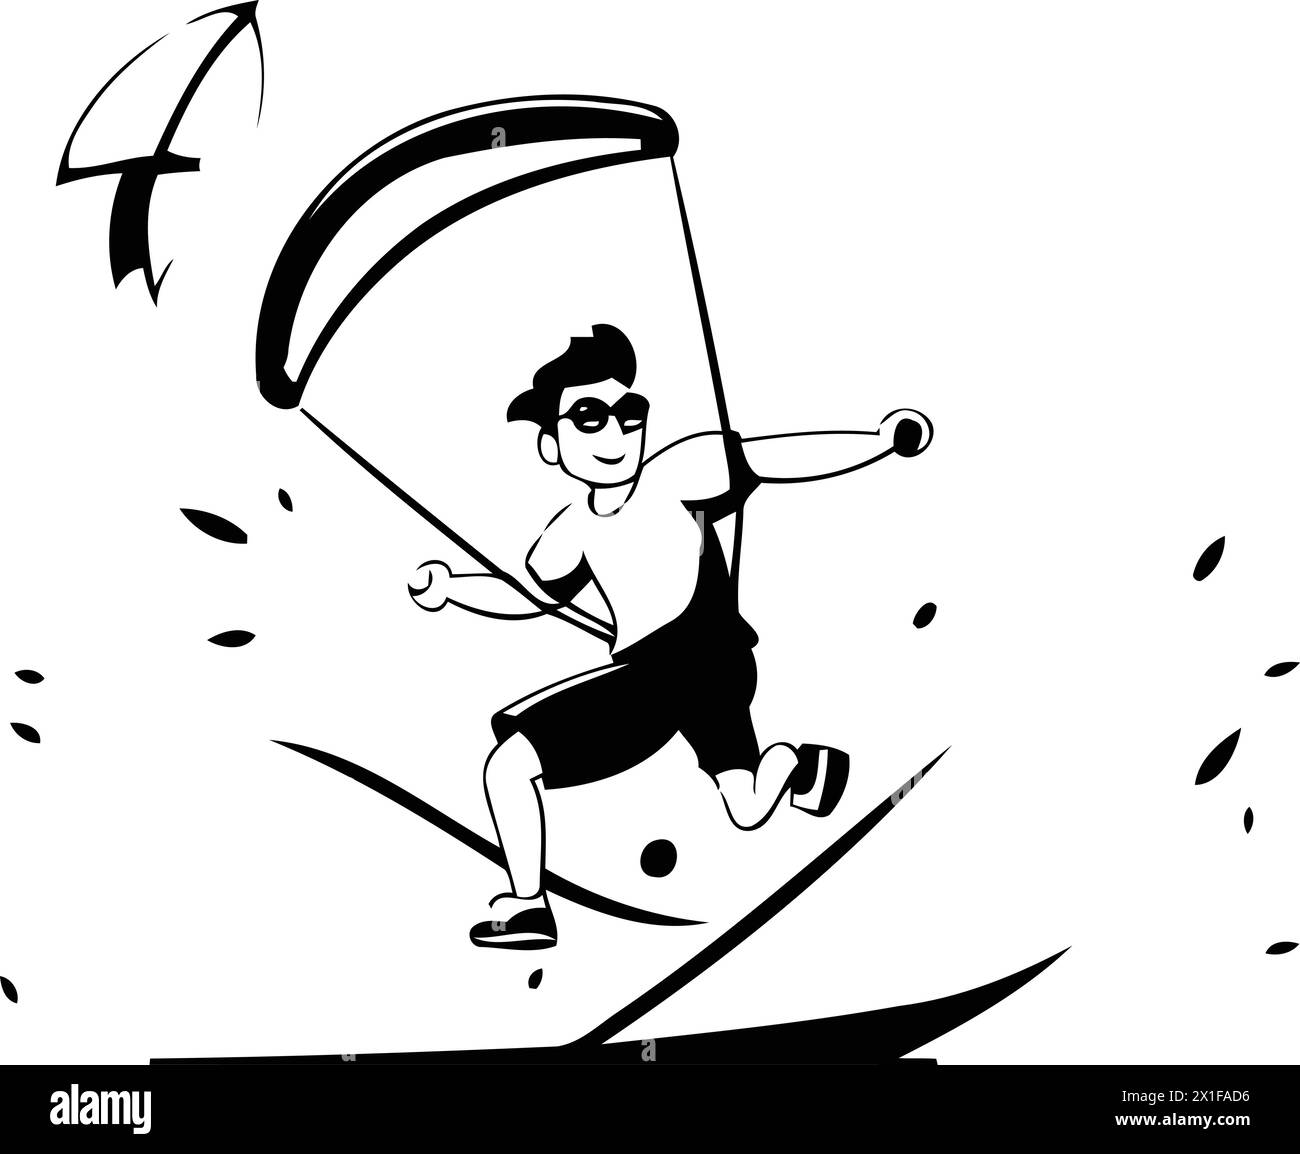 Kitesurf. sport extrême. illustration vectorielle de kitesurf. Illustration de Vecteur